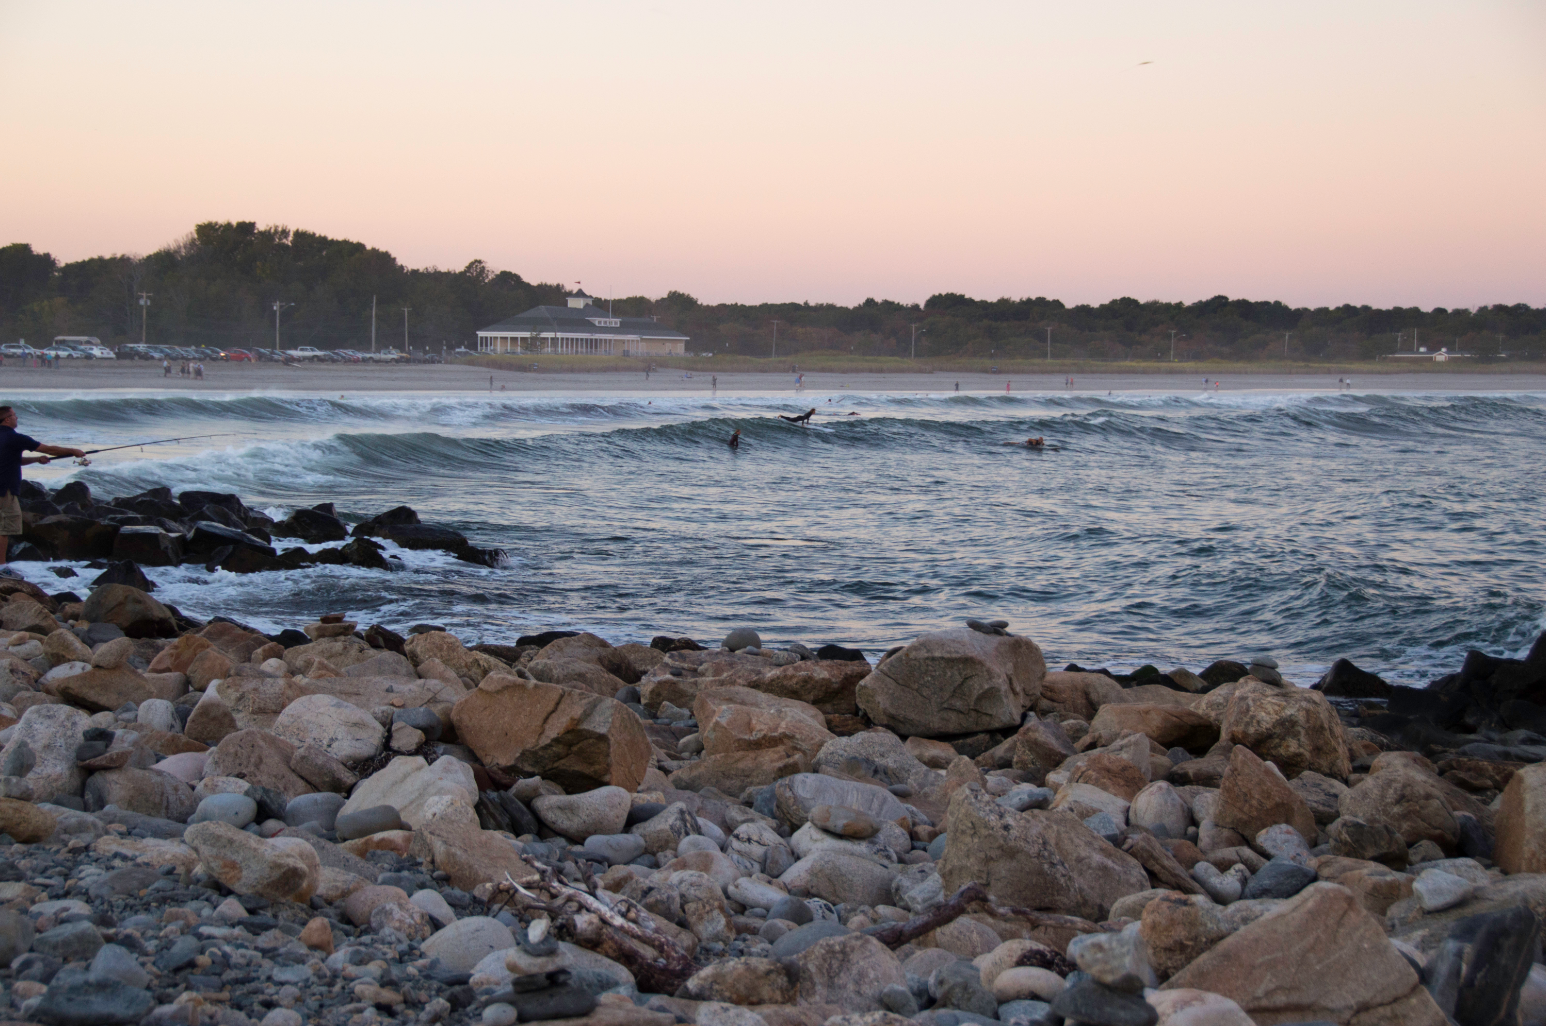 Panoramic view of the waves at Narragansett, Rhode Island